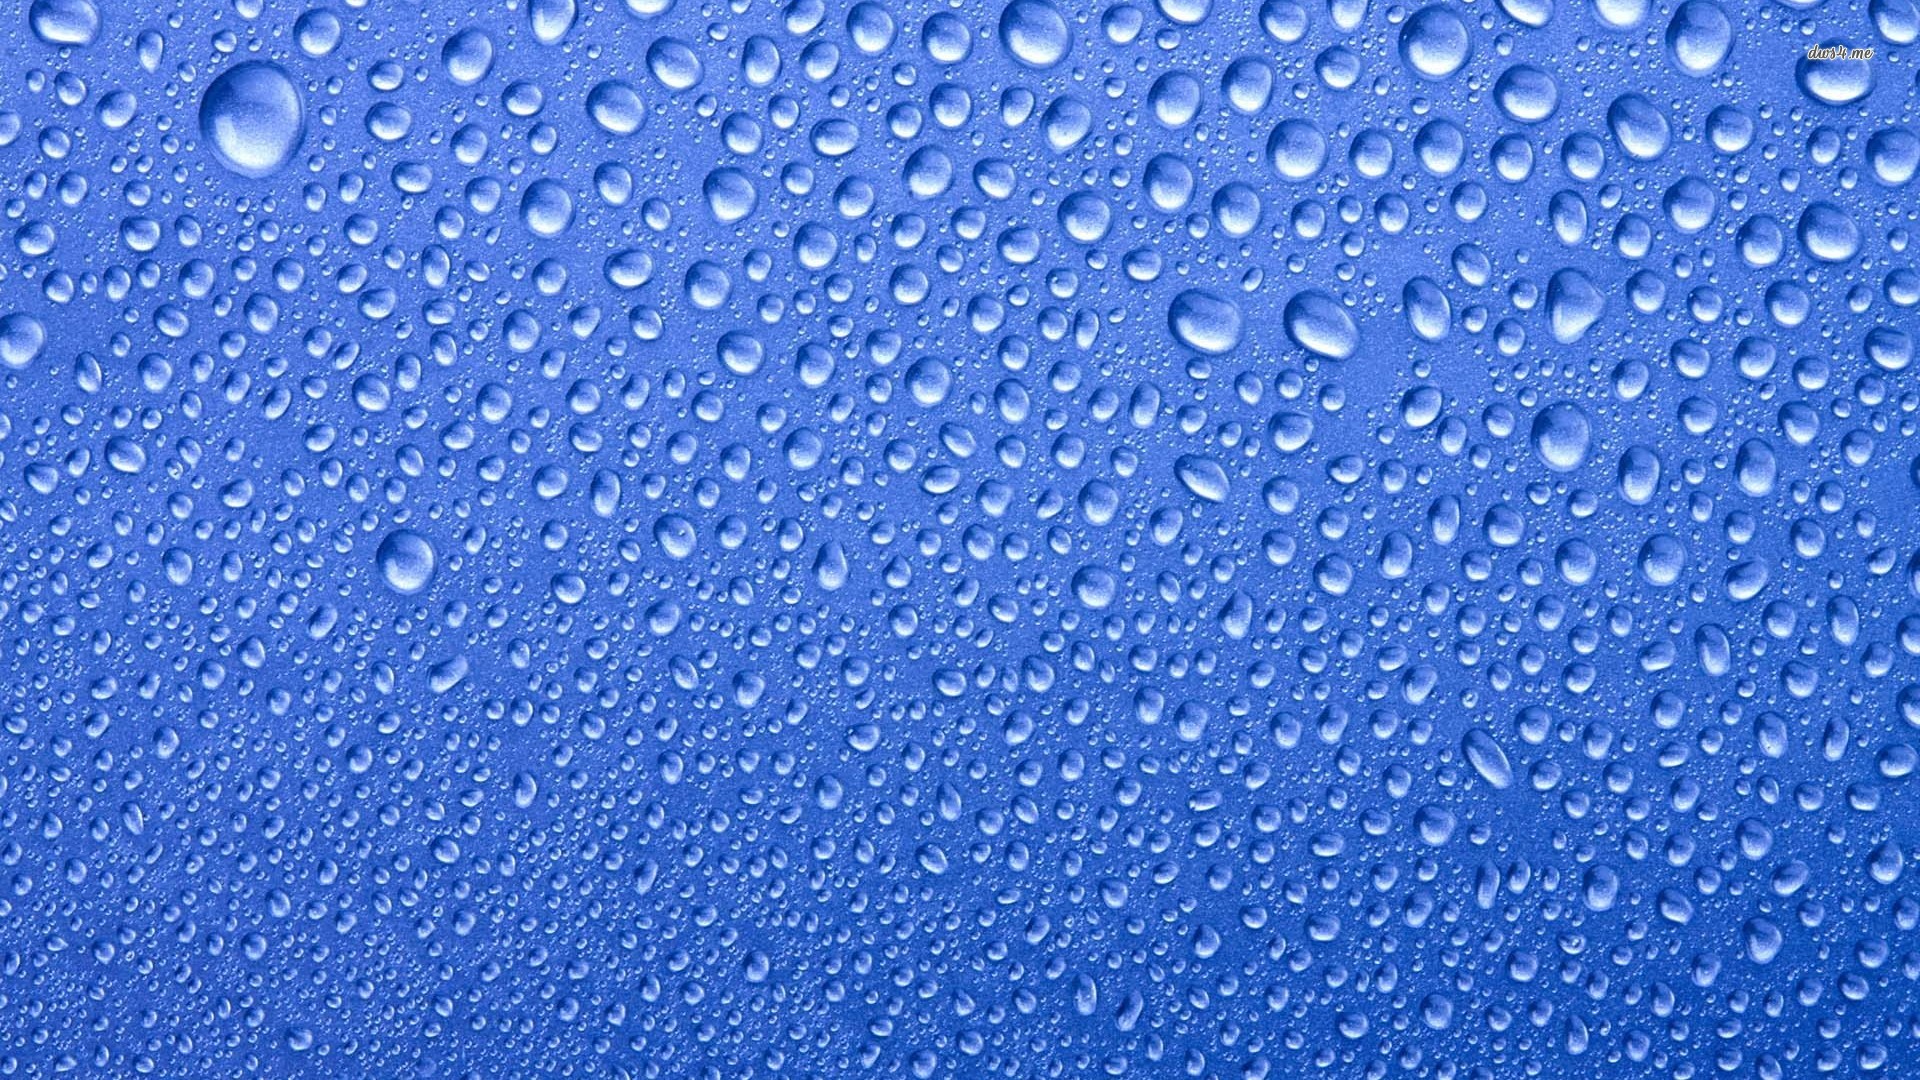 Earth Water Drop Wallpaper   water drop background 24   Anglerzcom